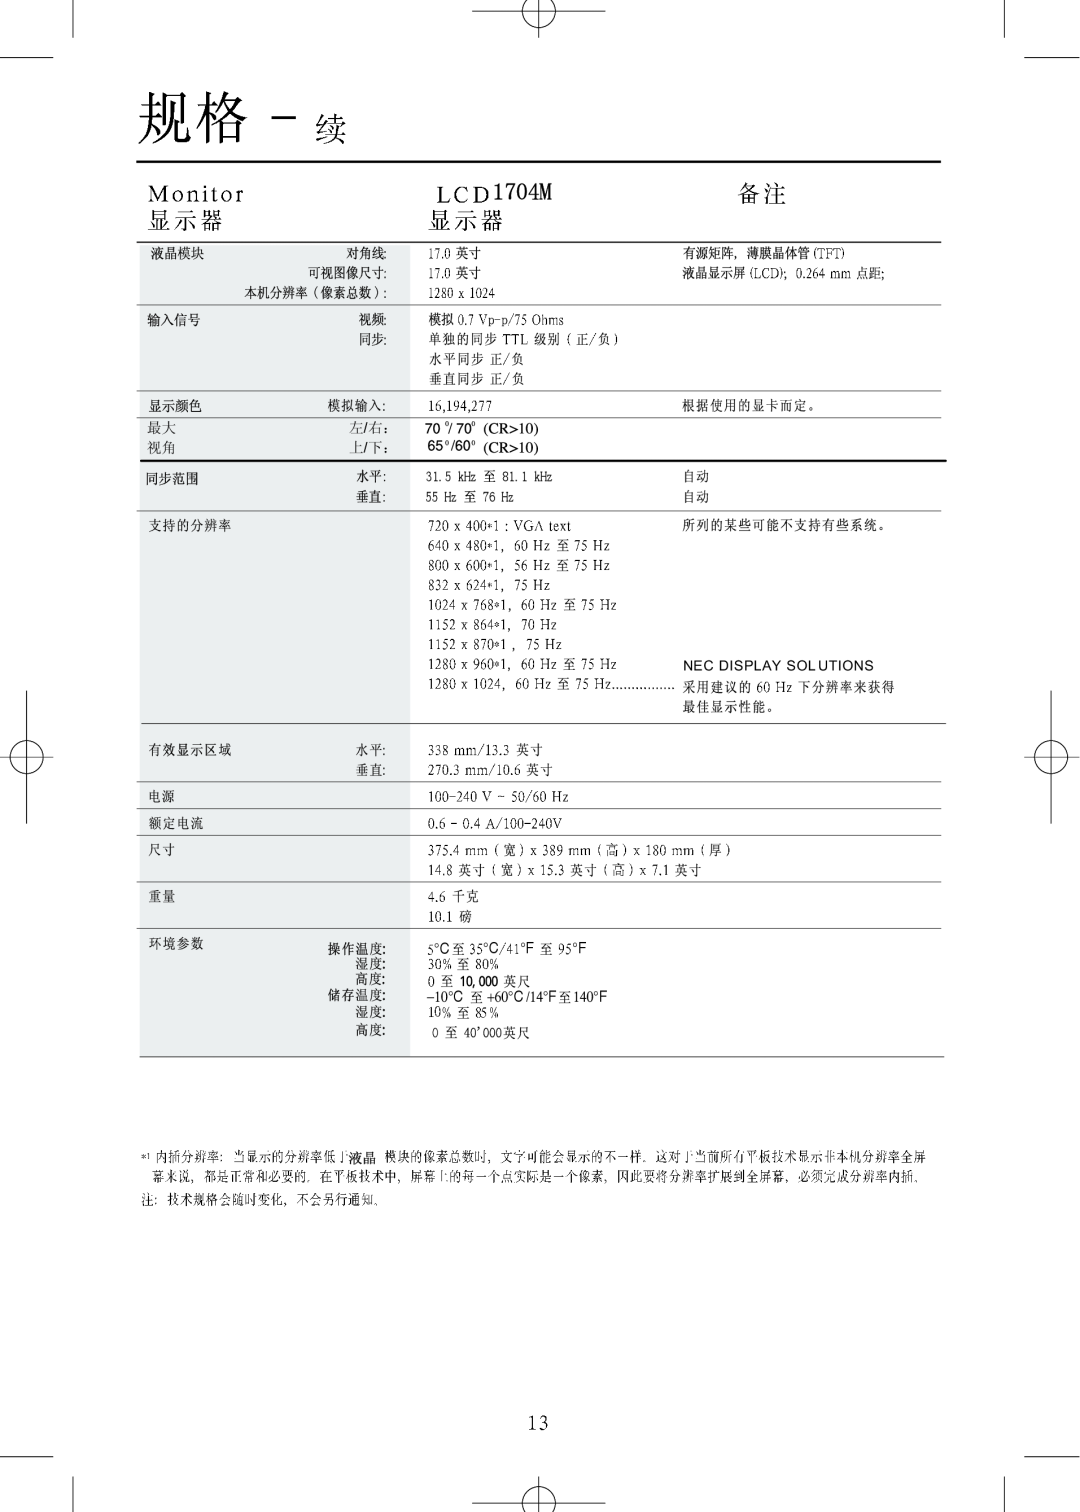 NEC LCD1904M manual 1704M, C F,   , 左 /右：, 上 /下：, kHz 至 81.1 kHz 55 Hz 至 76 Hz,      , Nec Display Sol Utions 